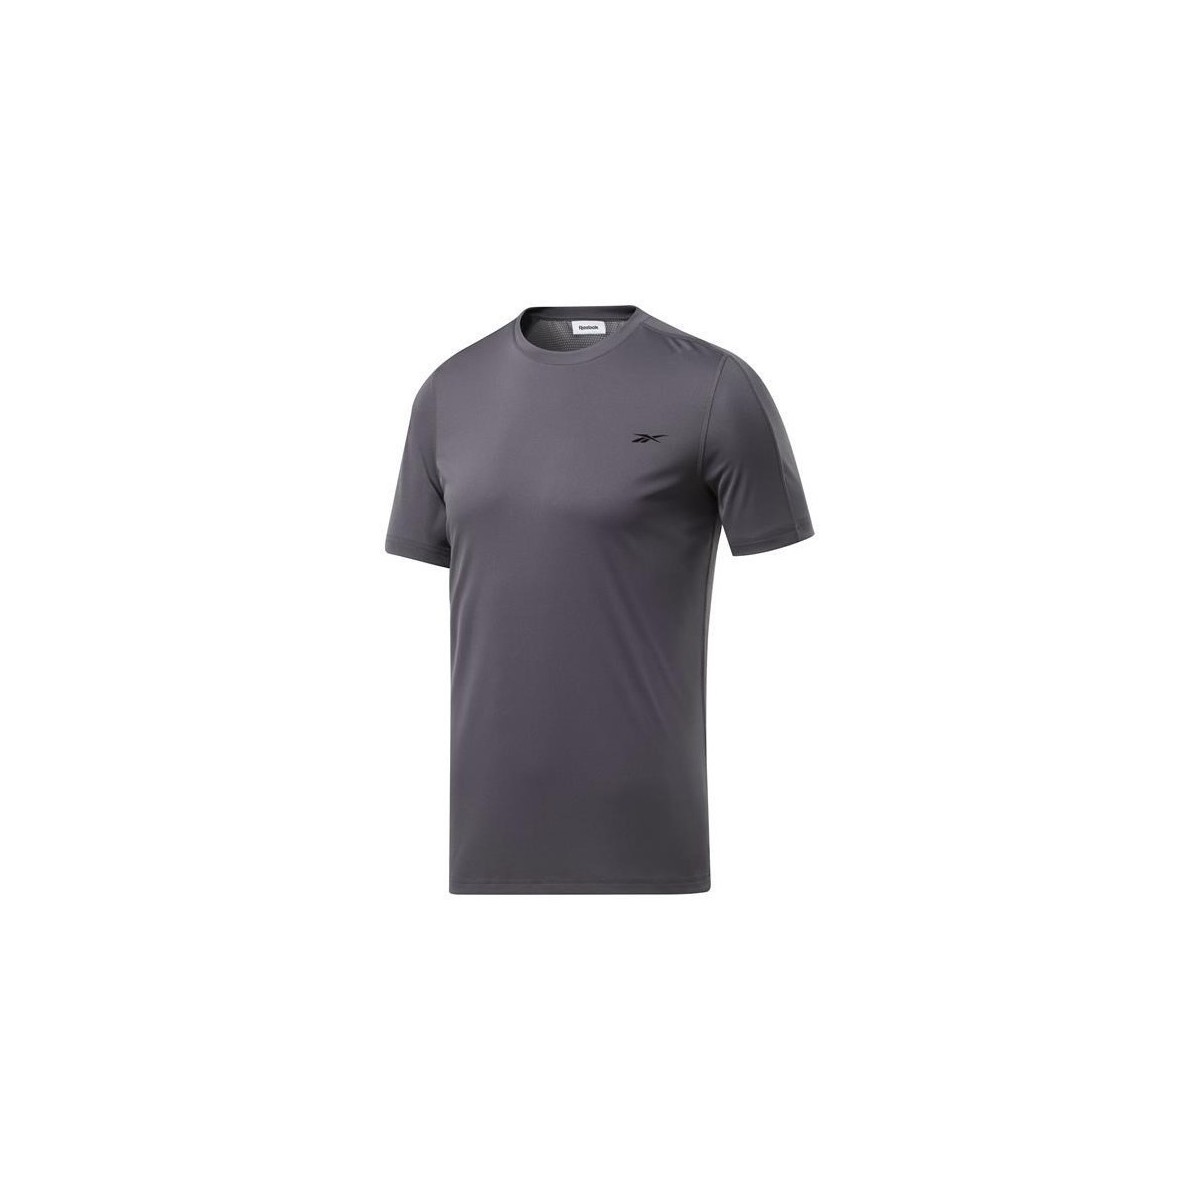 Kleidung Herren T-Shirts Reebok Sport Wor Comm Tech Tee Graphit